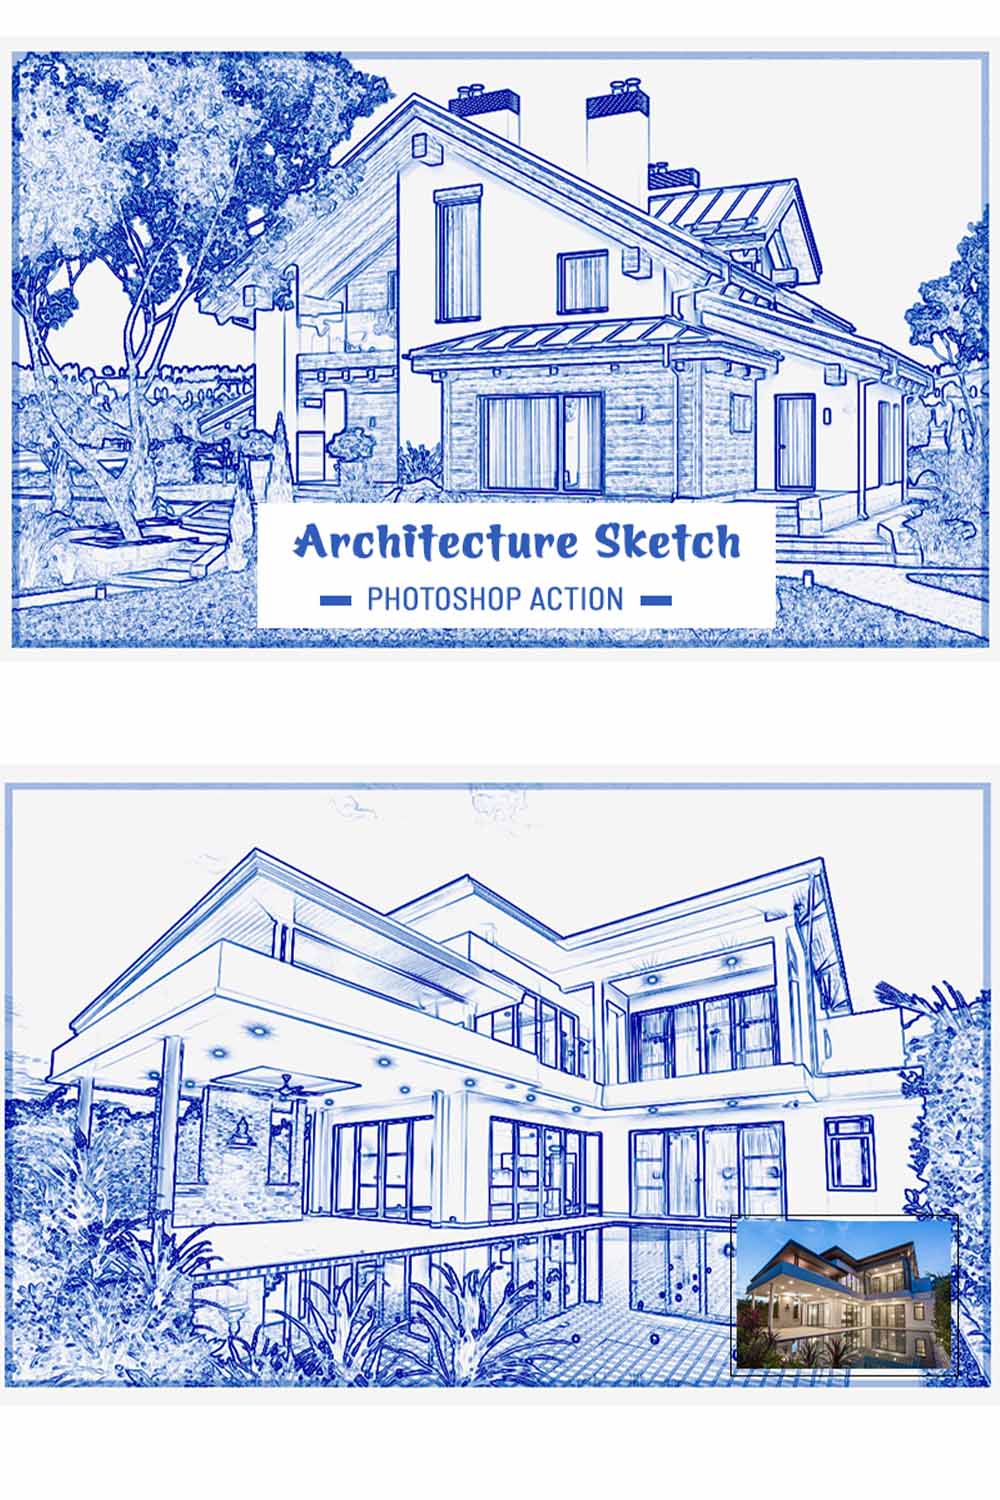 Architecture Sketch photoshop Action pinterest preview image.